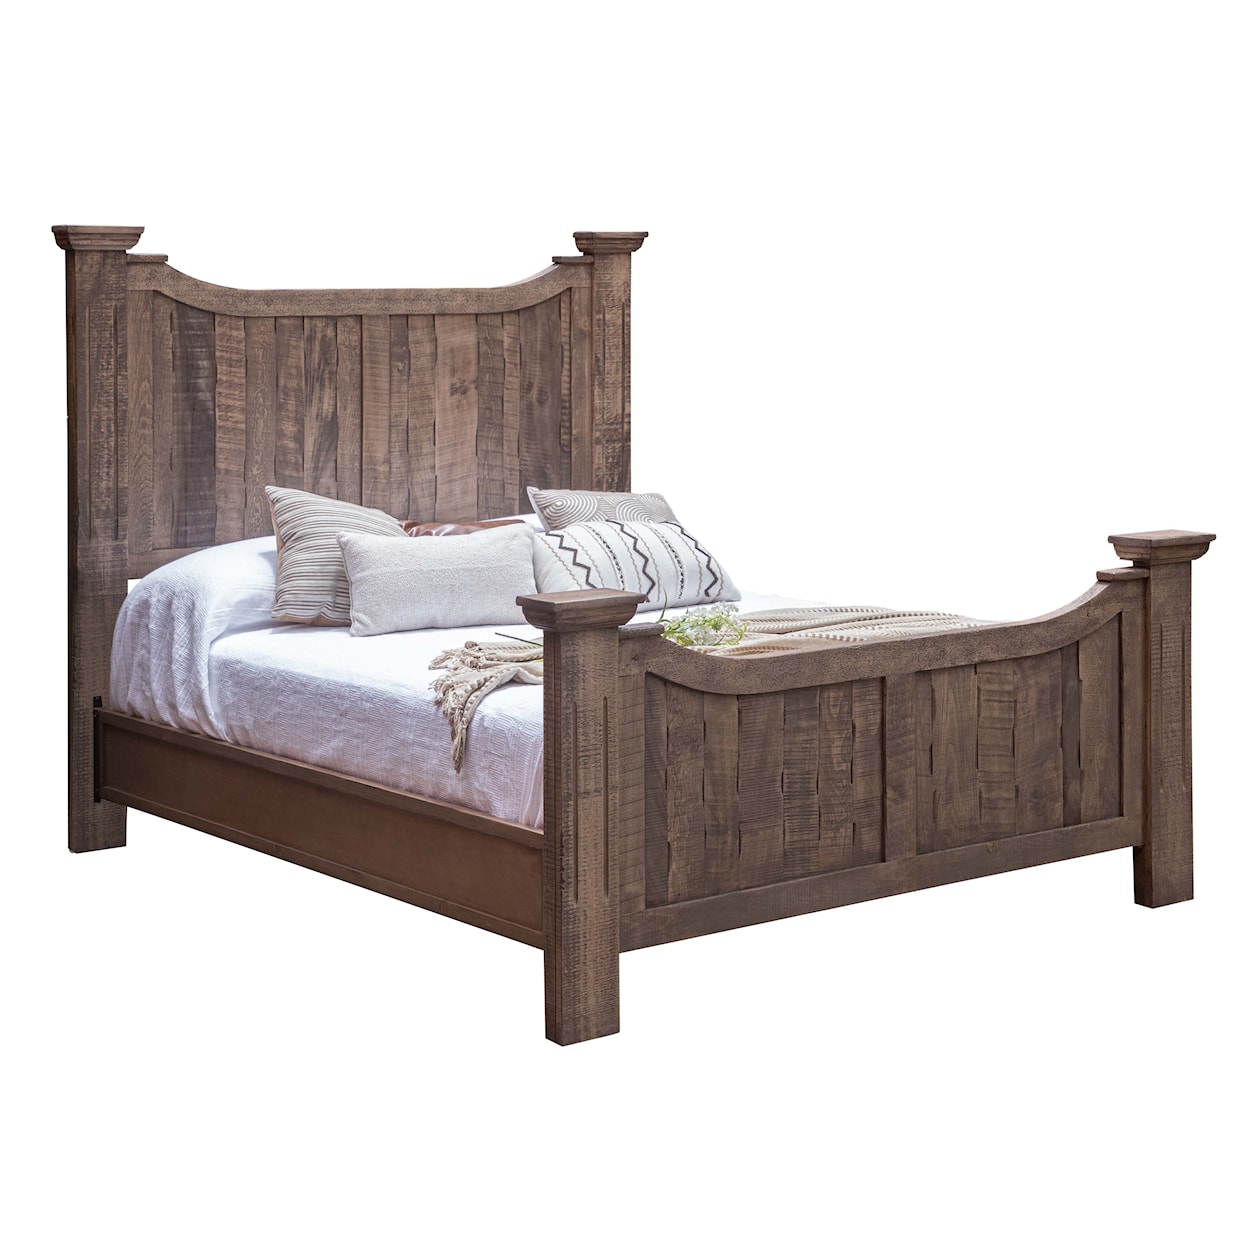 International Furniture Direct Madeira King Panel Bed